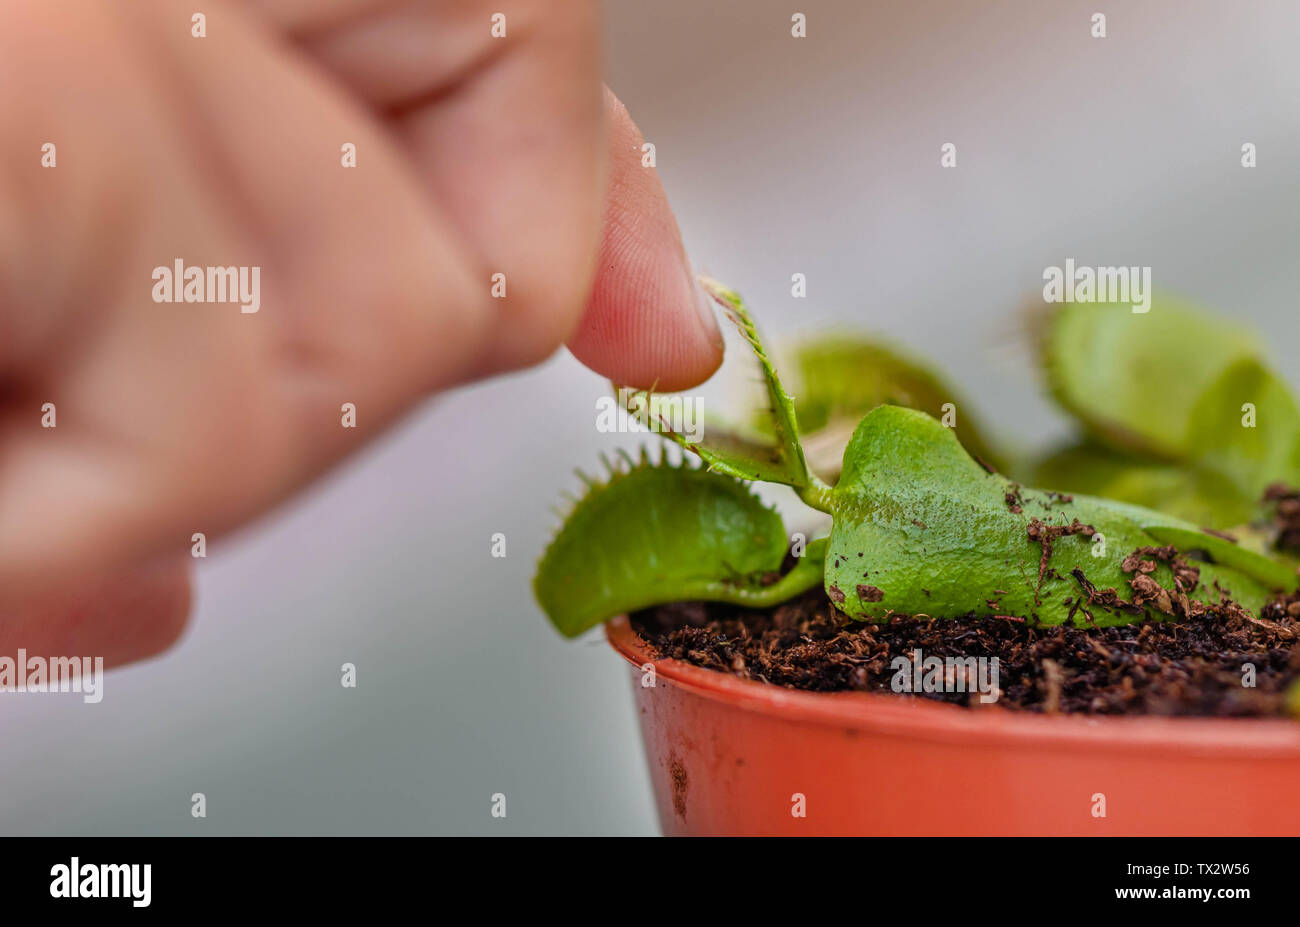 child hand touching carnivorous plant Venus flytrap Stock Photo